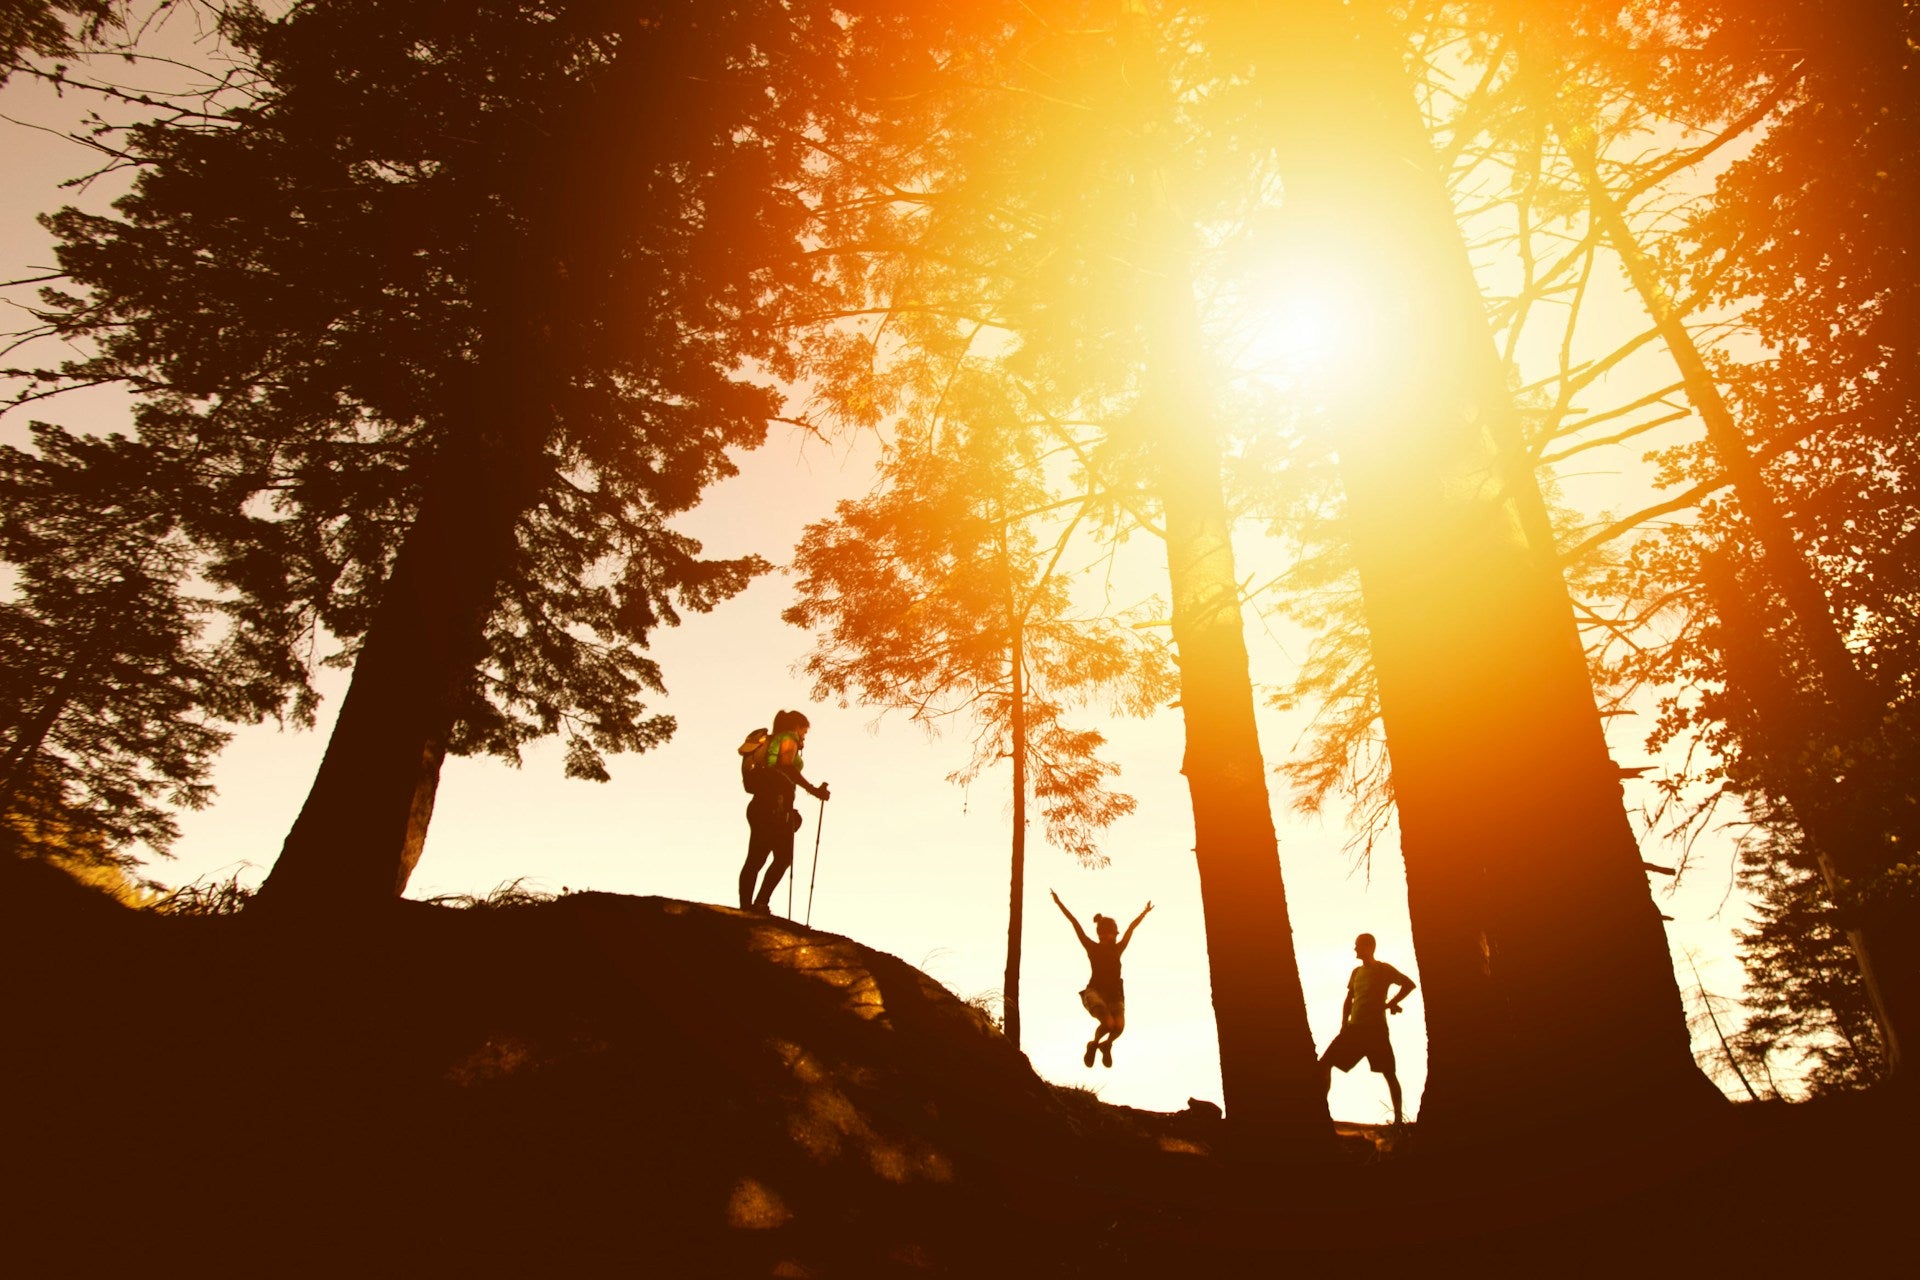 A sunburst through trees while three people hike.